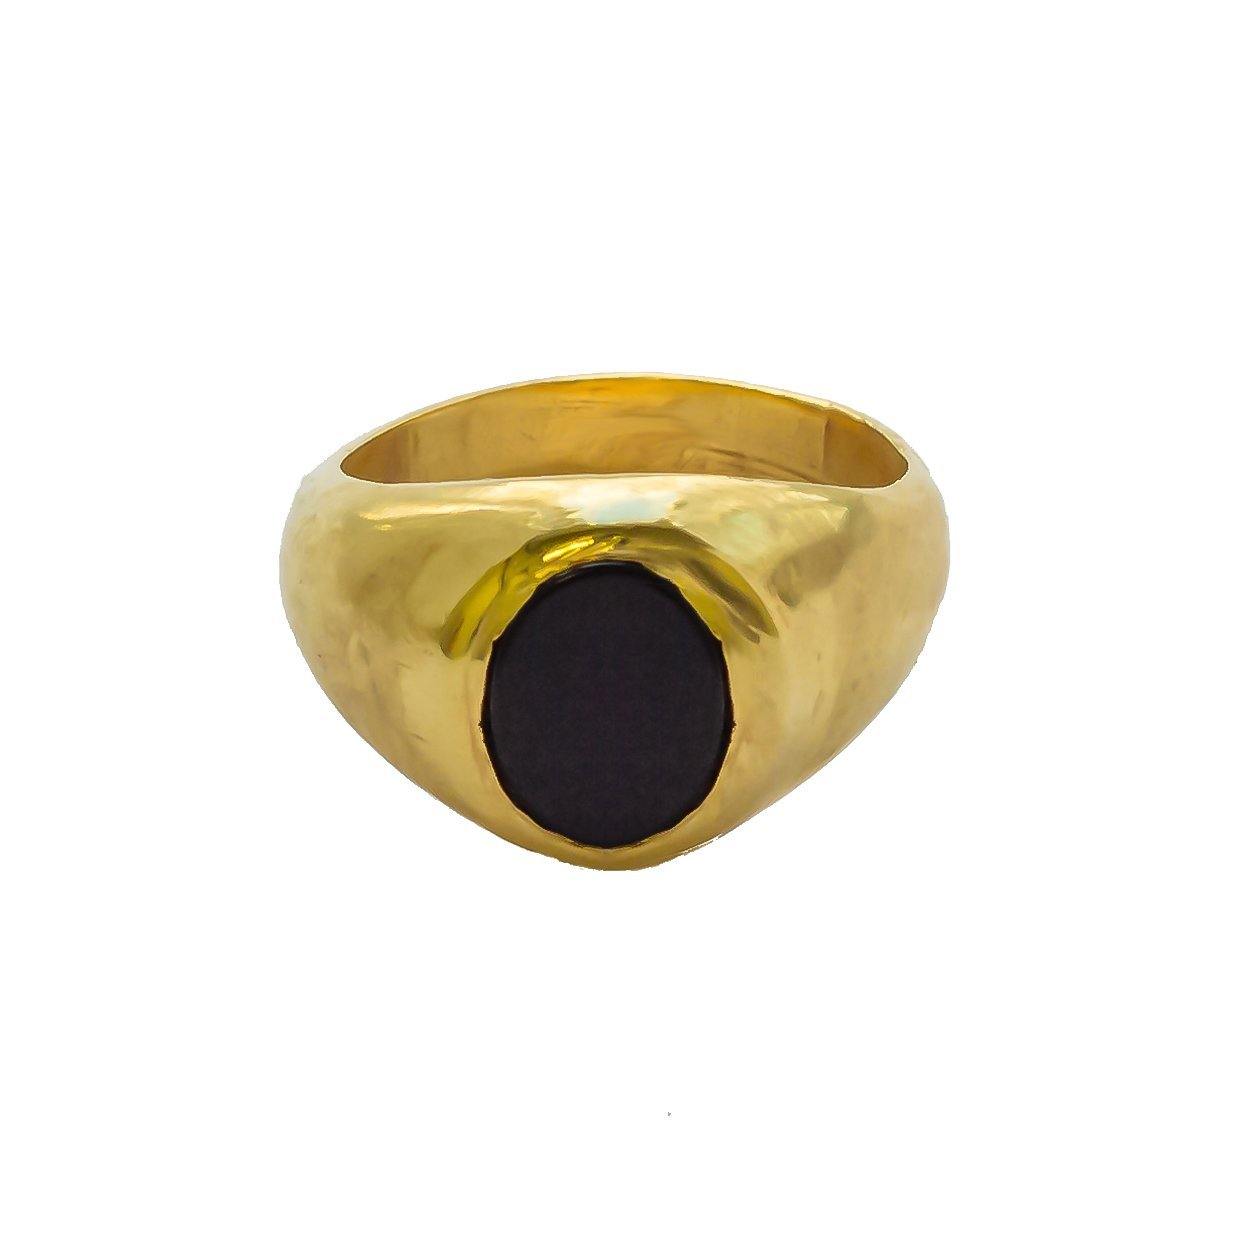 ULTRAONYX Hand-Crafted Sovereign Ring - Gold - Stööki